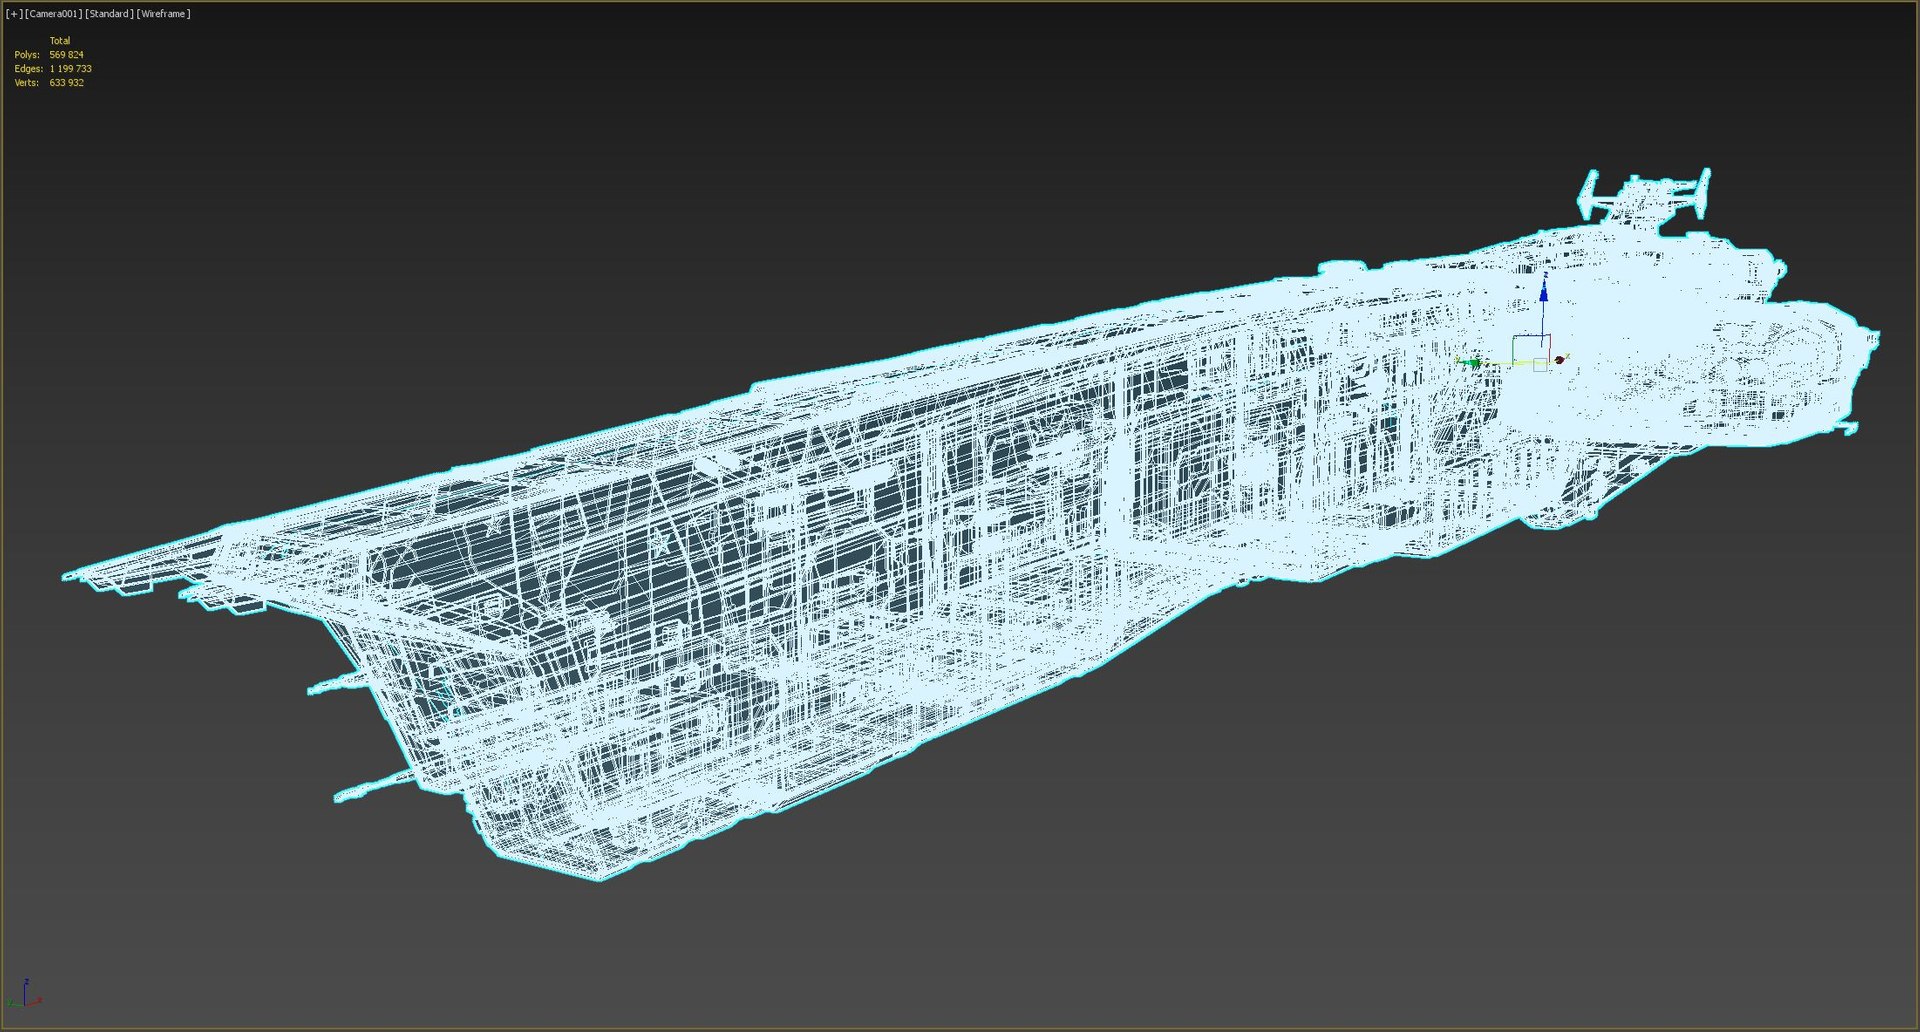 Sci Fi Space Battleship Modelo 3D - TurboSquid 1653643